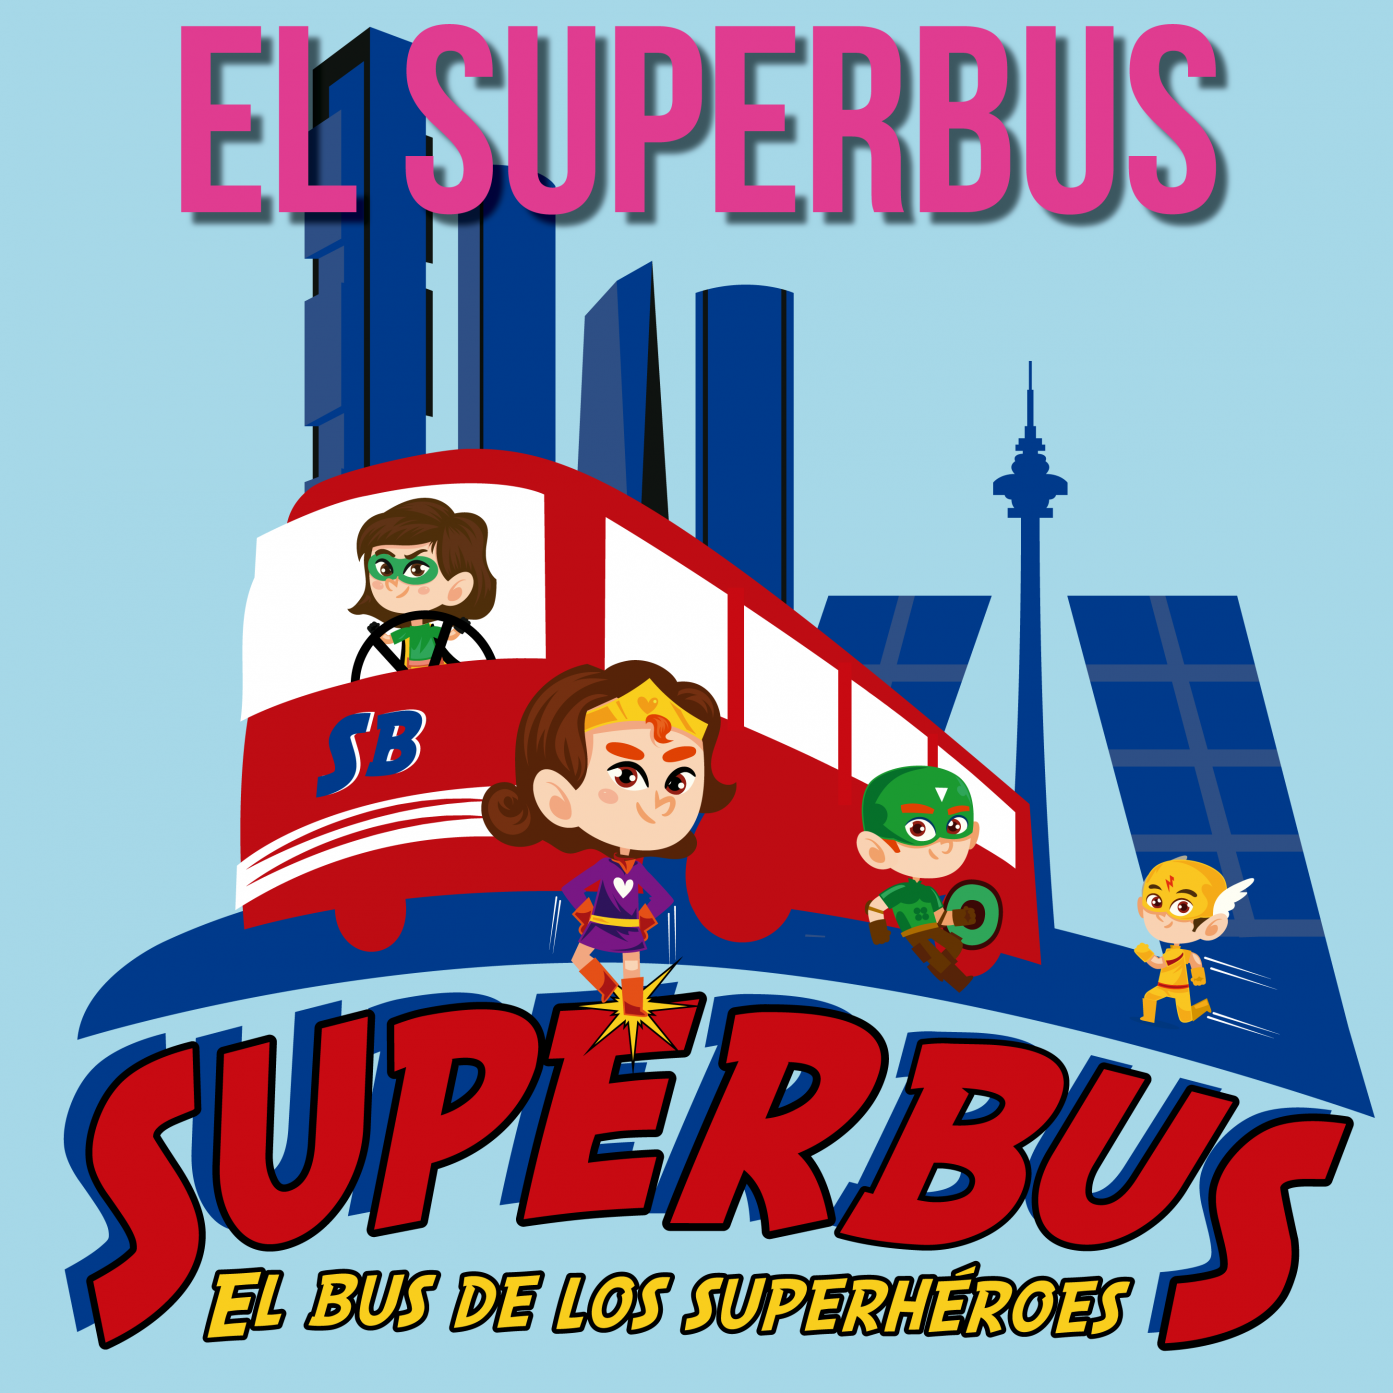 El Superbus